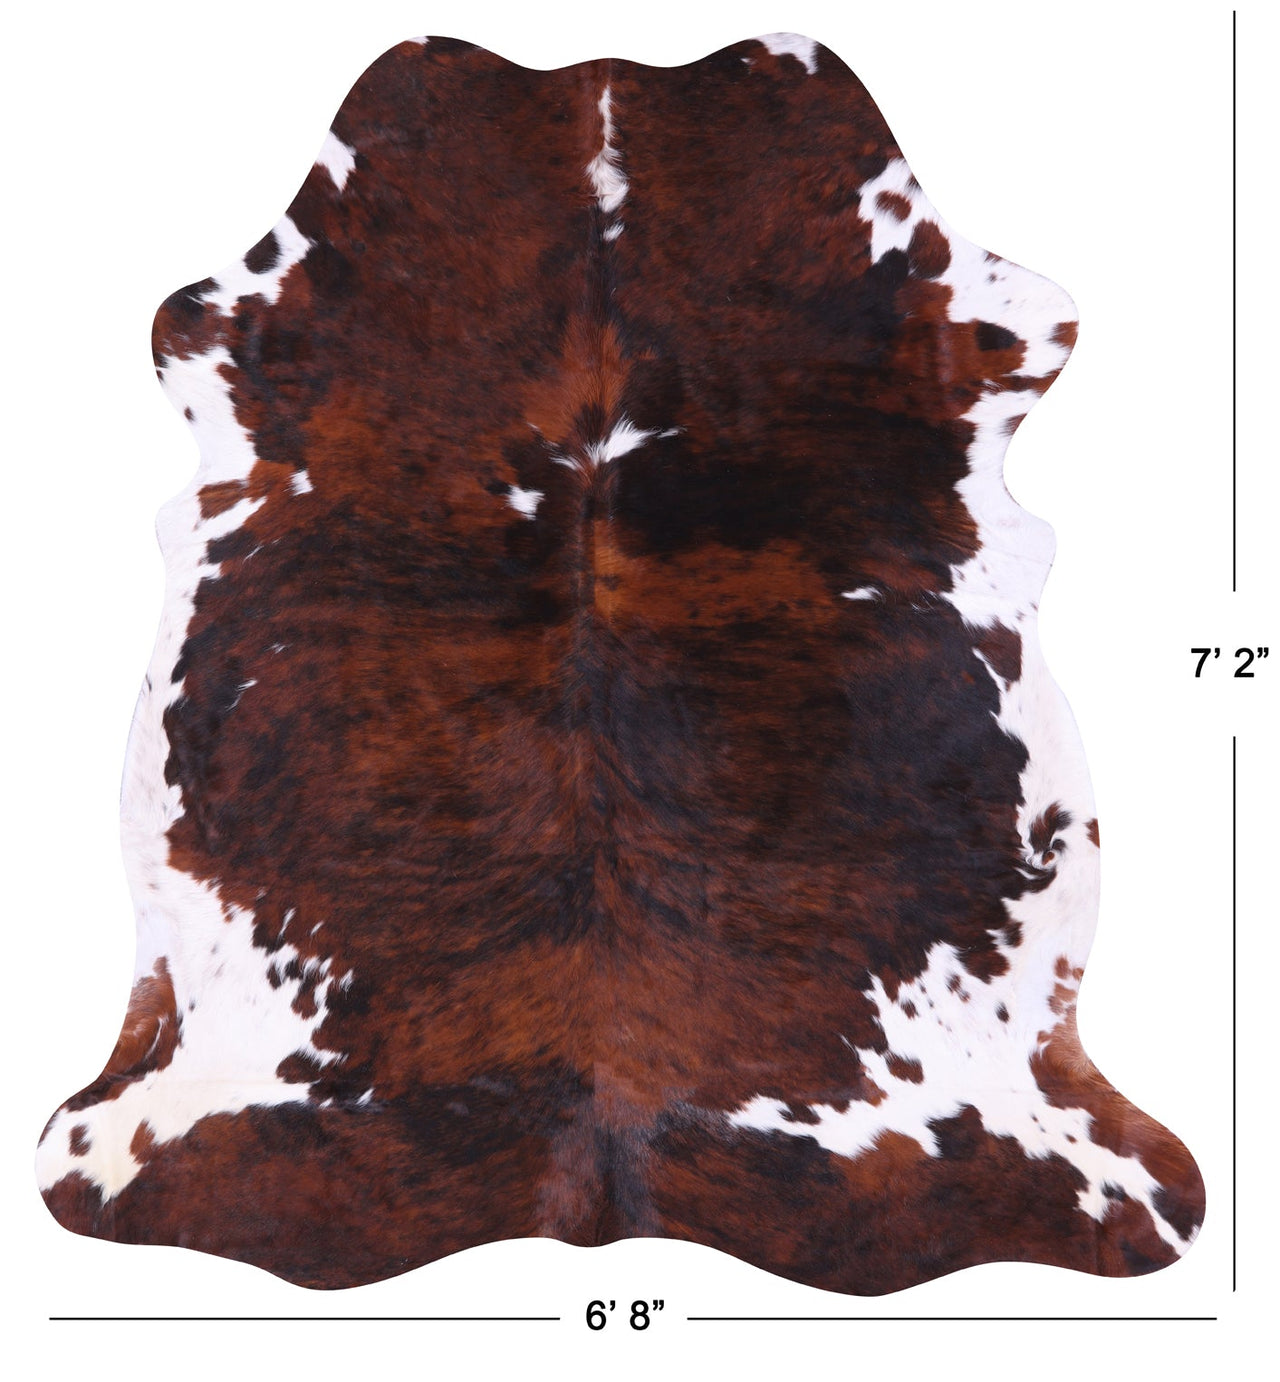 Tricolor Natural Cowhide Rug - XLarge 7'2"H x 6'8"W